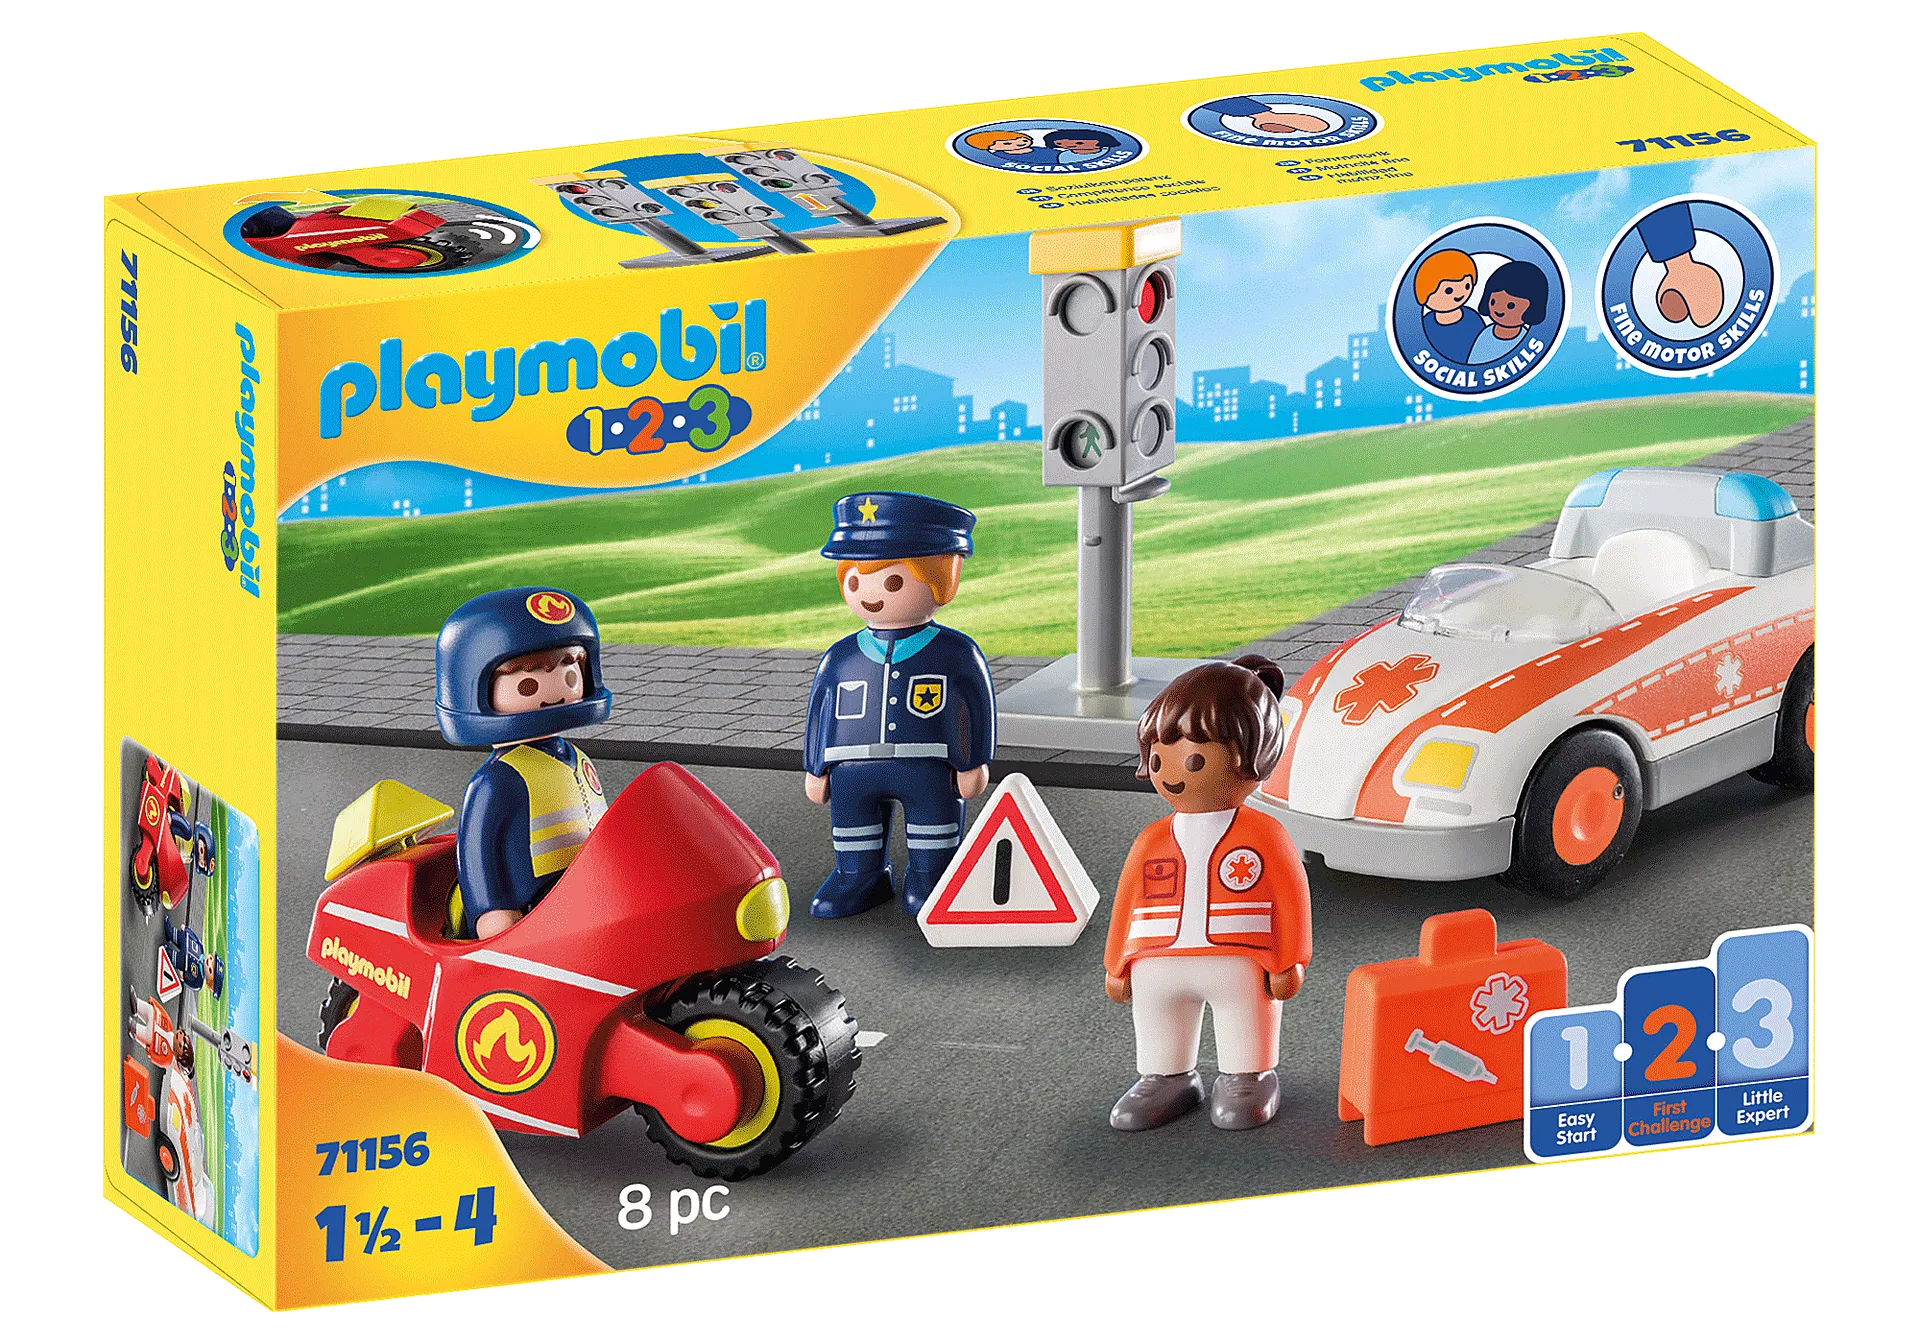 Playmobil Fireman with Tree - Toys 4 U